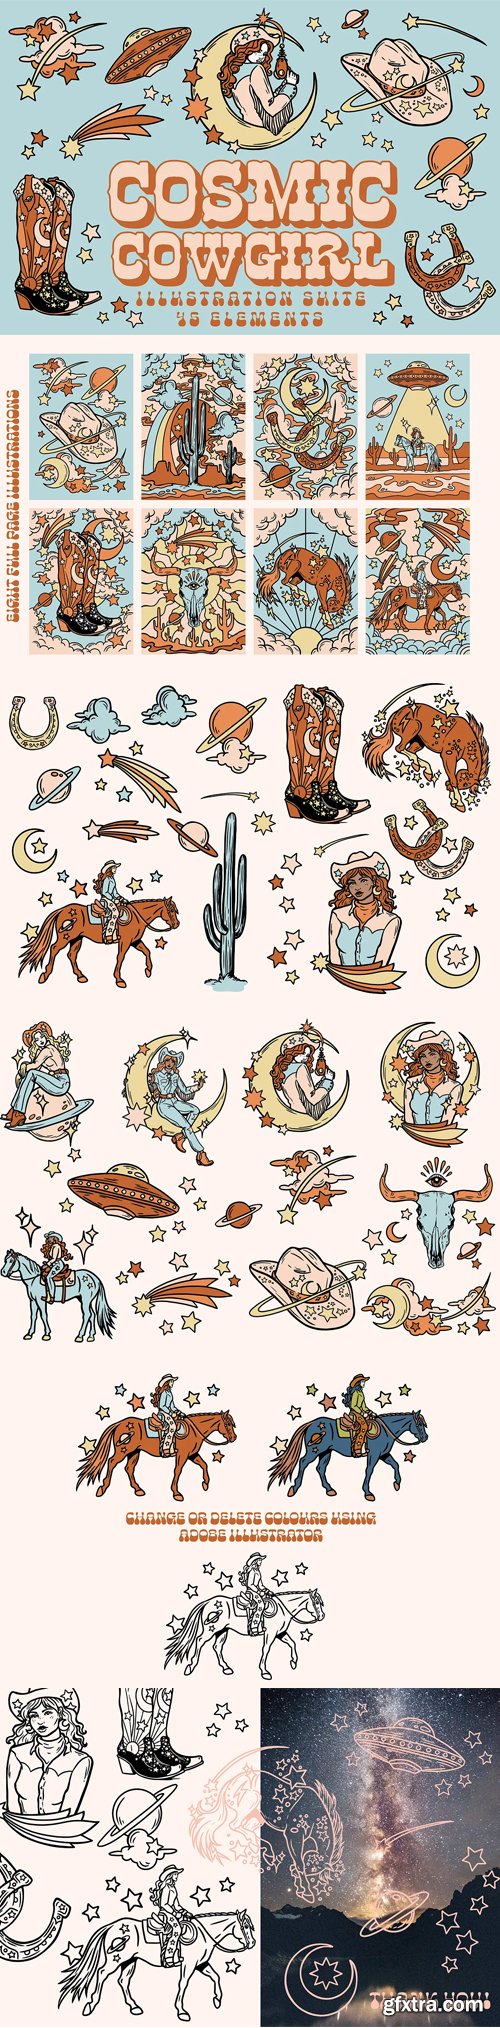 CreativeMarket - Cosmic Cowgirl &ndash; Illustrations - 7171922